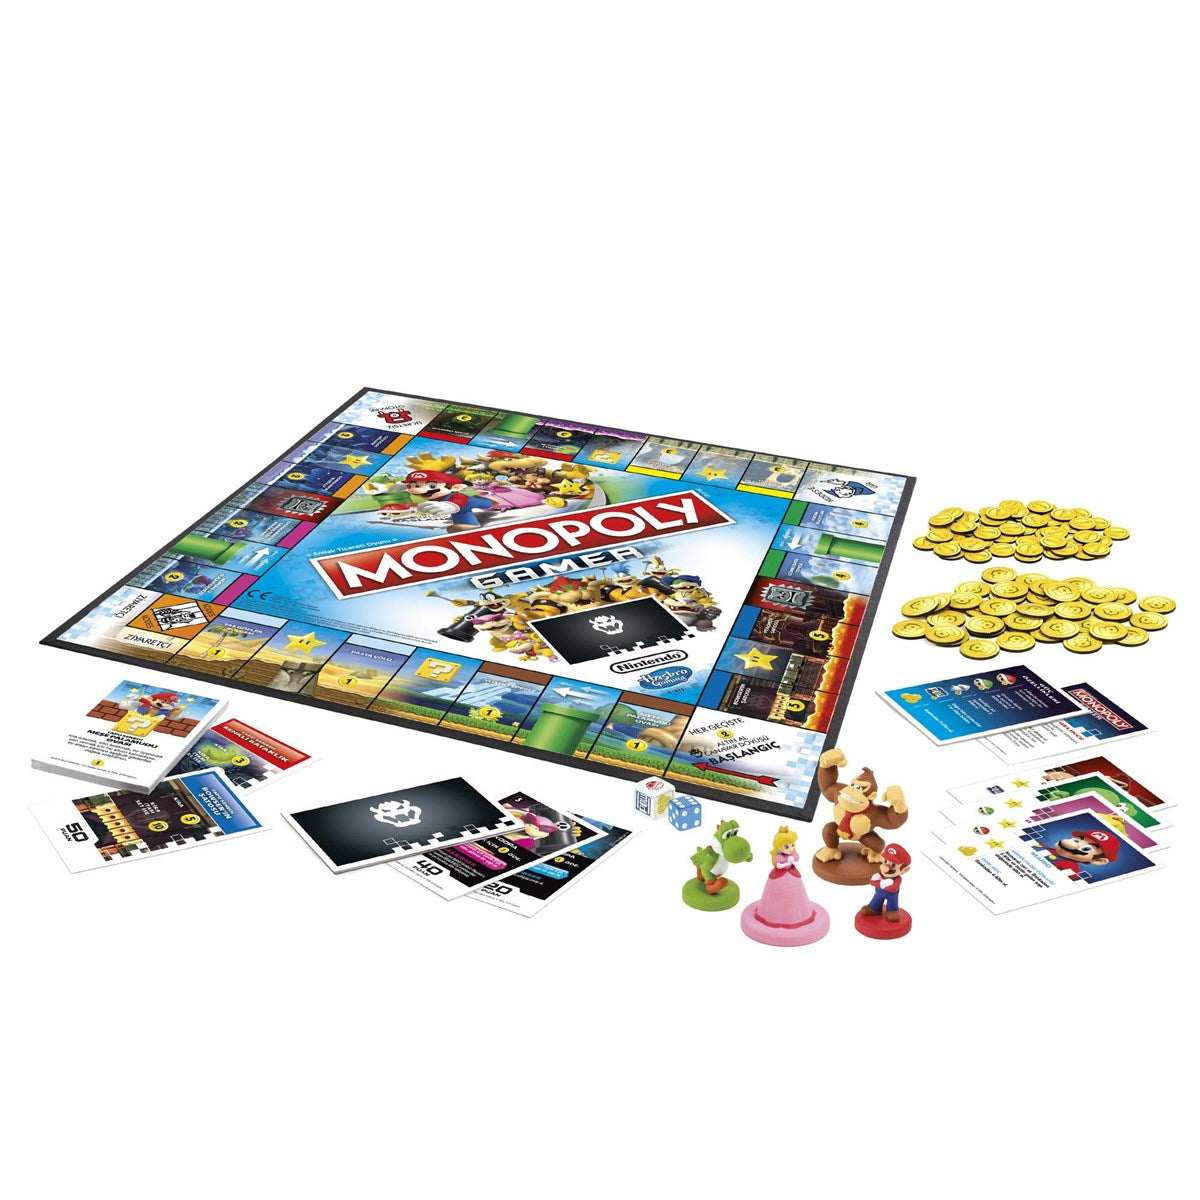 Monopoly Gamer C1815 | Toysall